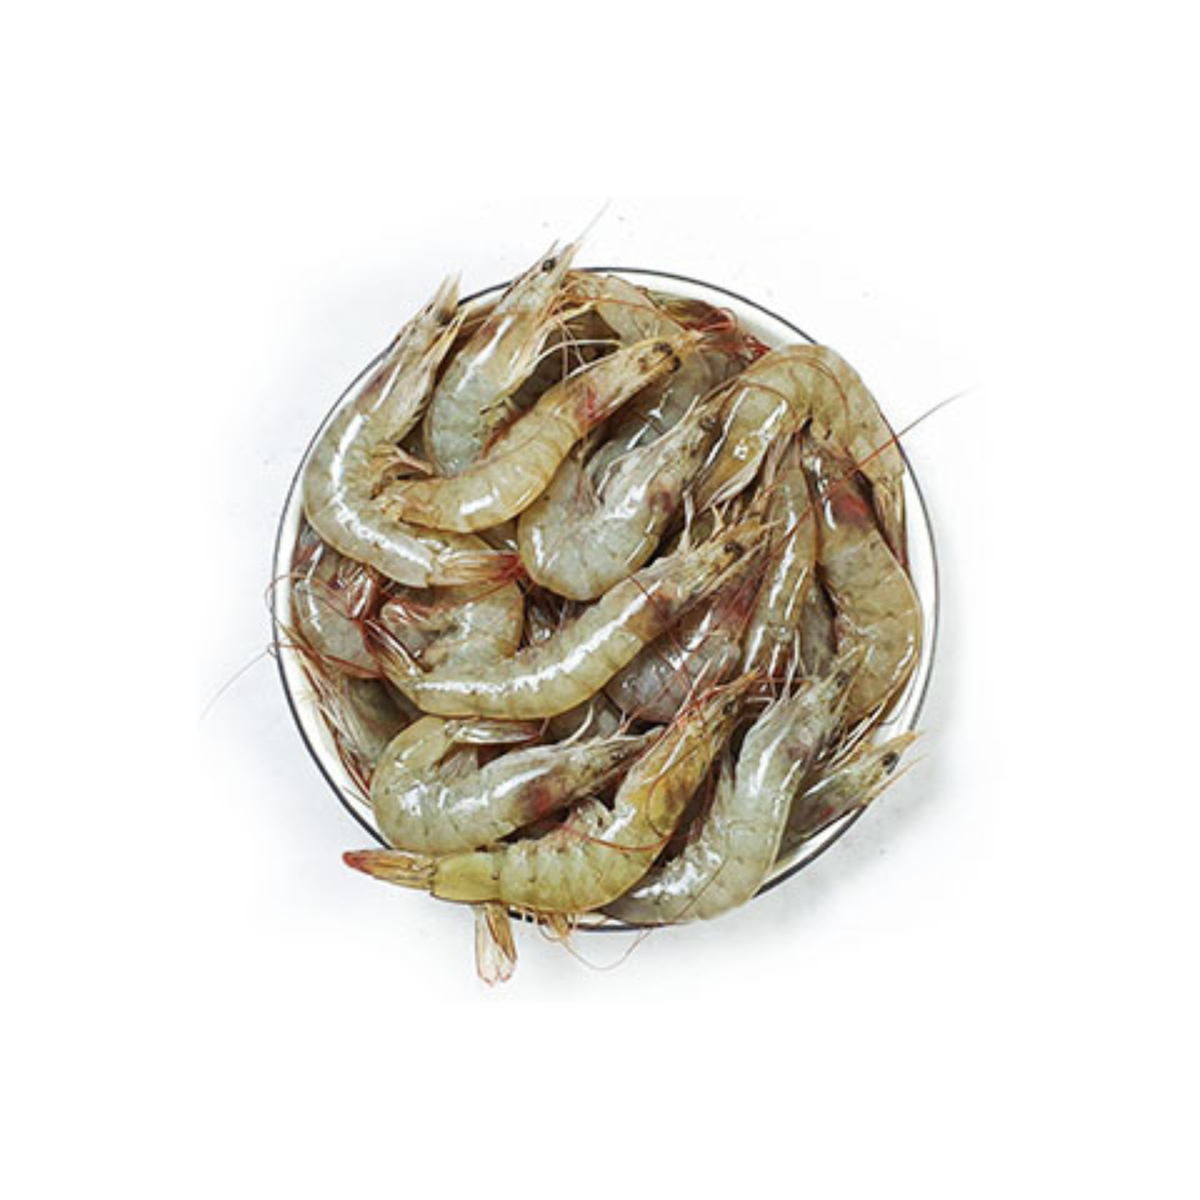 Buy Shrimp Small 500g Online at Best Price | Shell Fish | Lulu KSA in Saudi Arabia